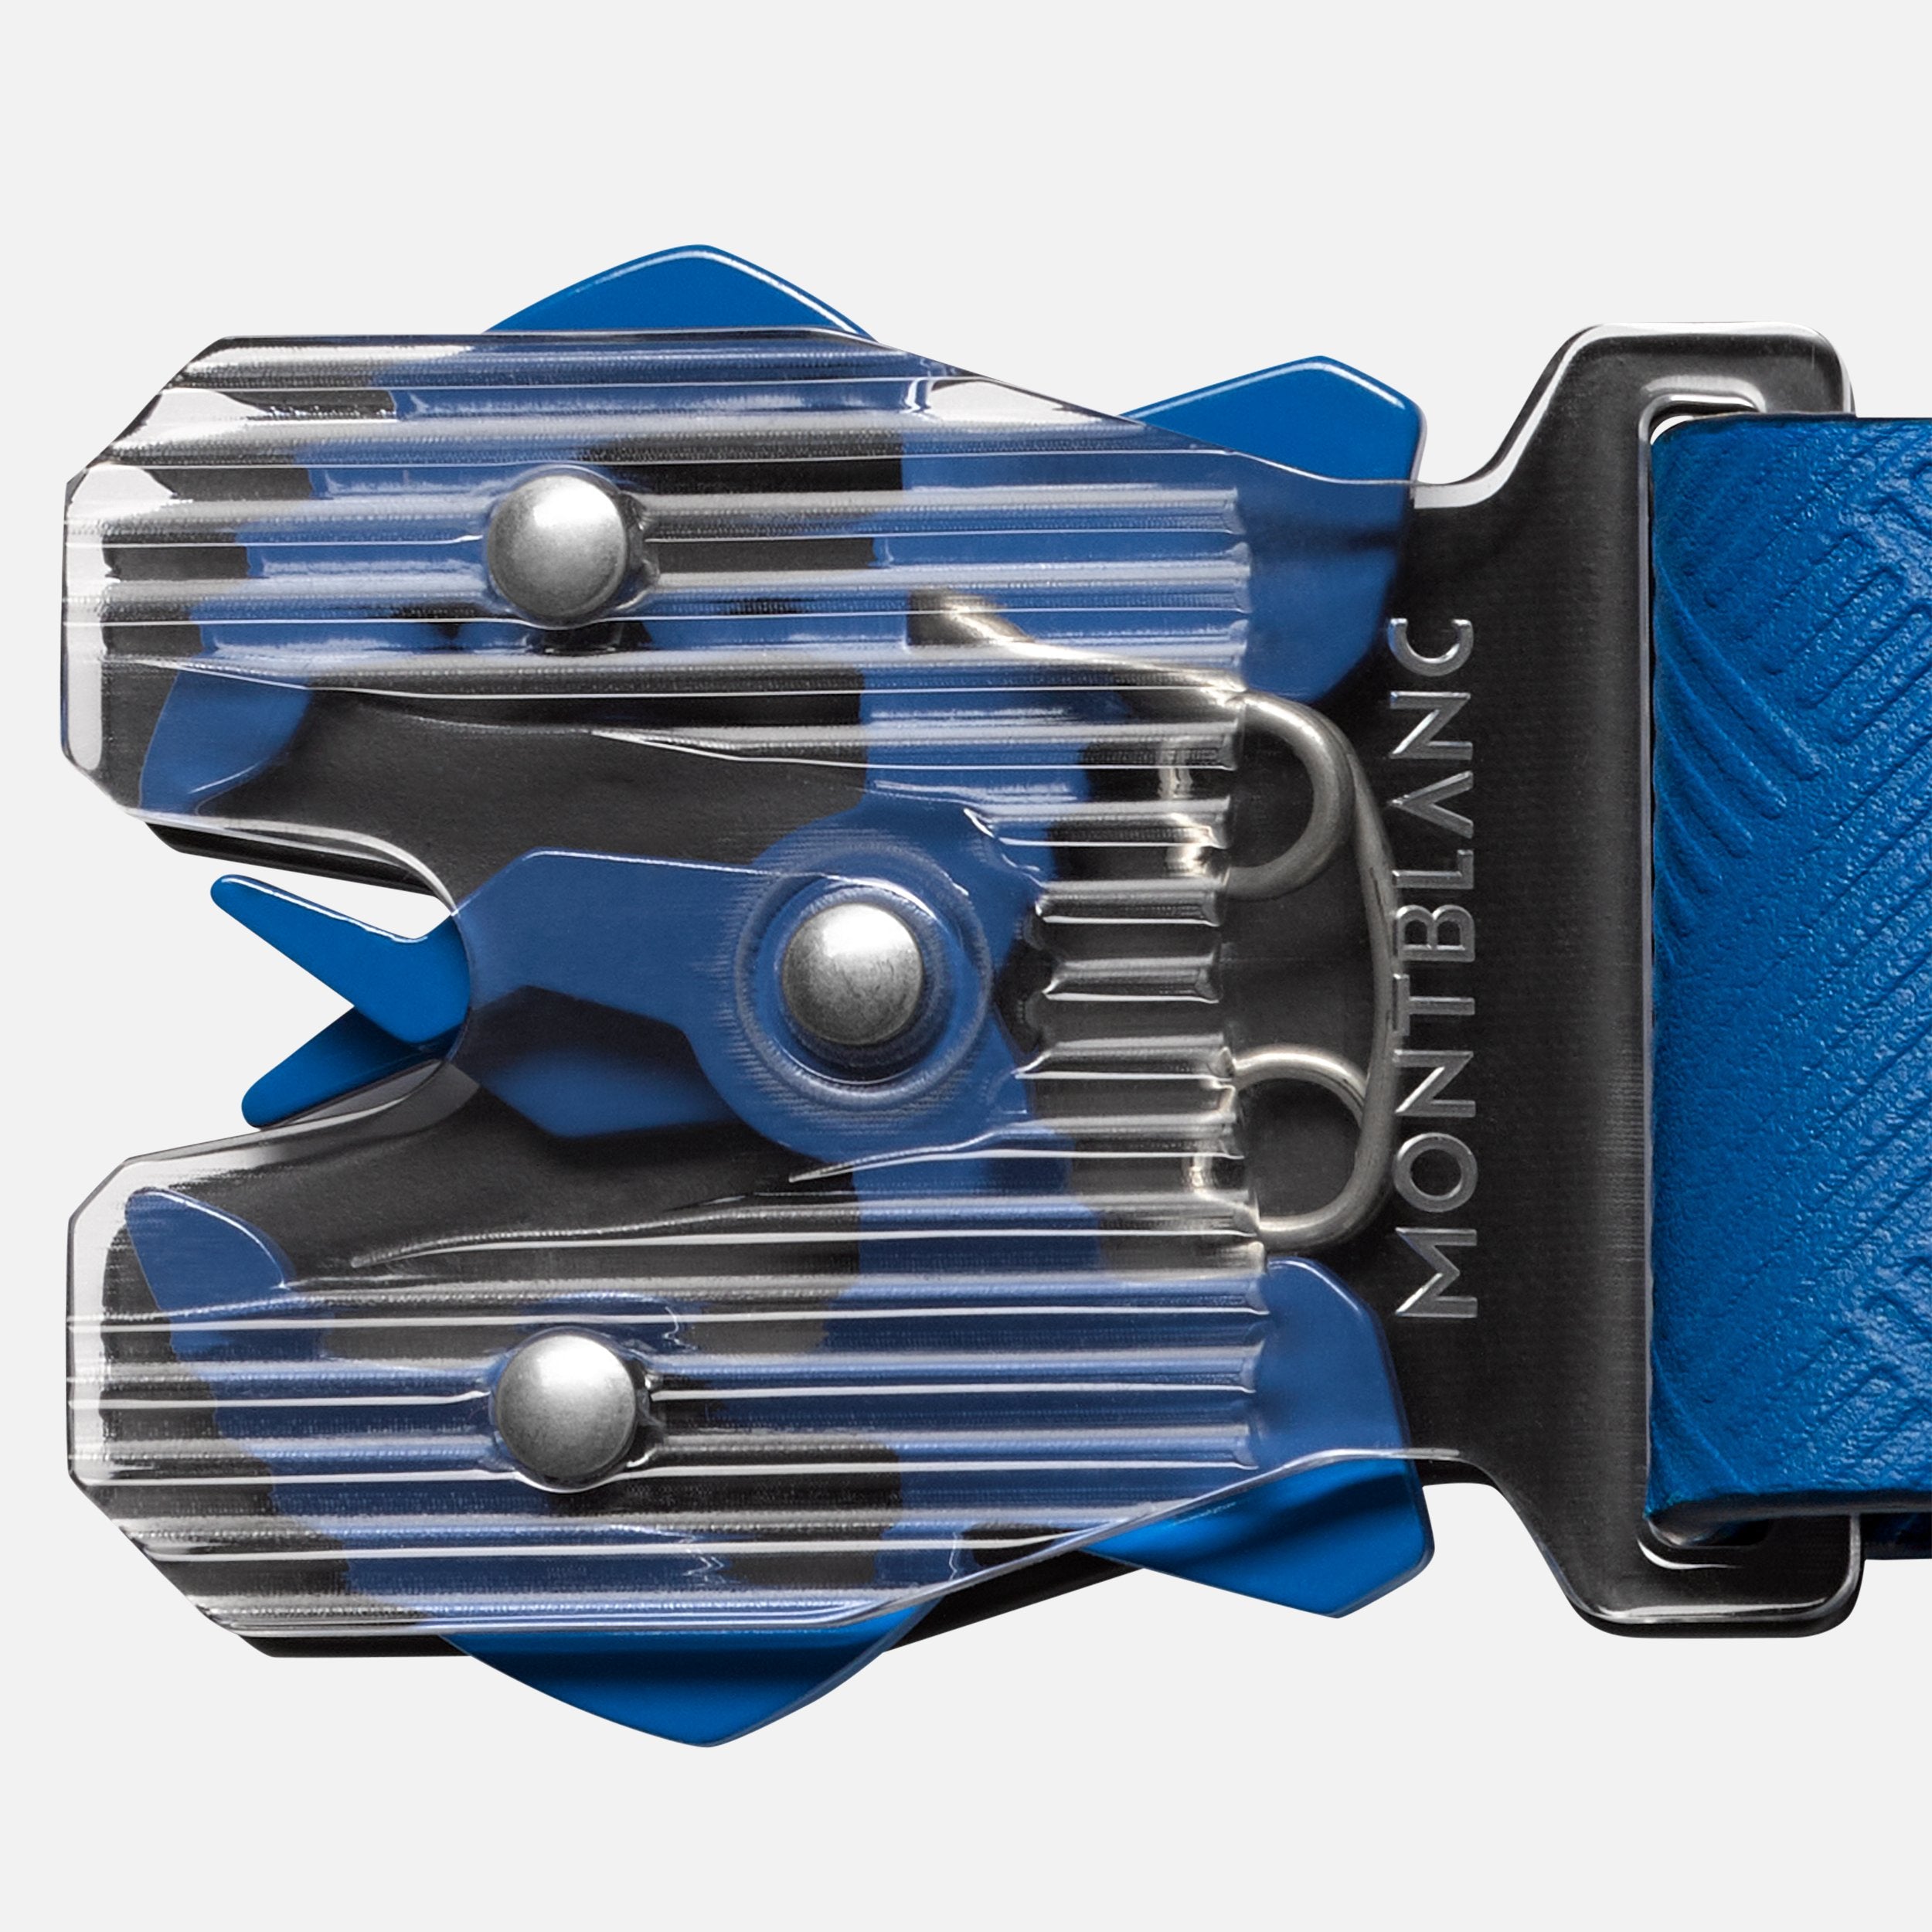 M LOCK 4810 buckle printed Atlantic blue 35 mm leather belt